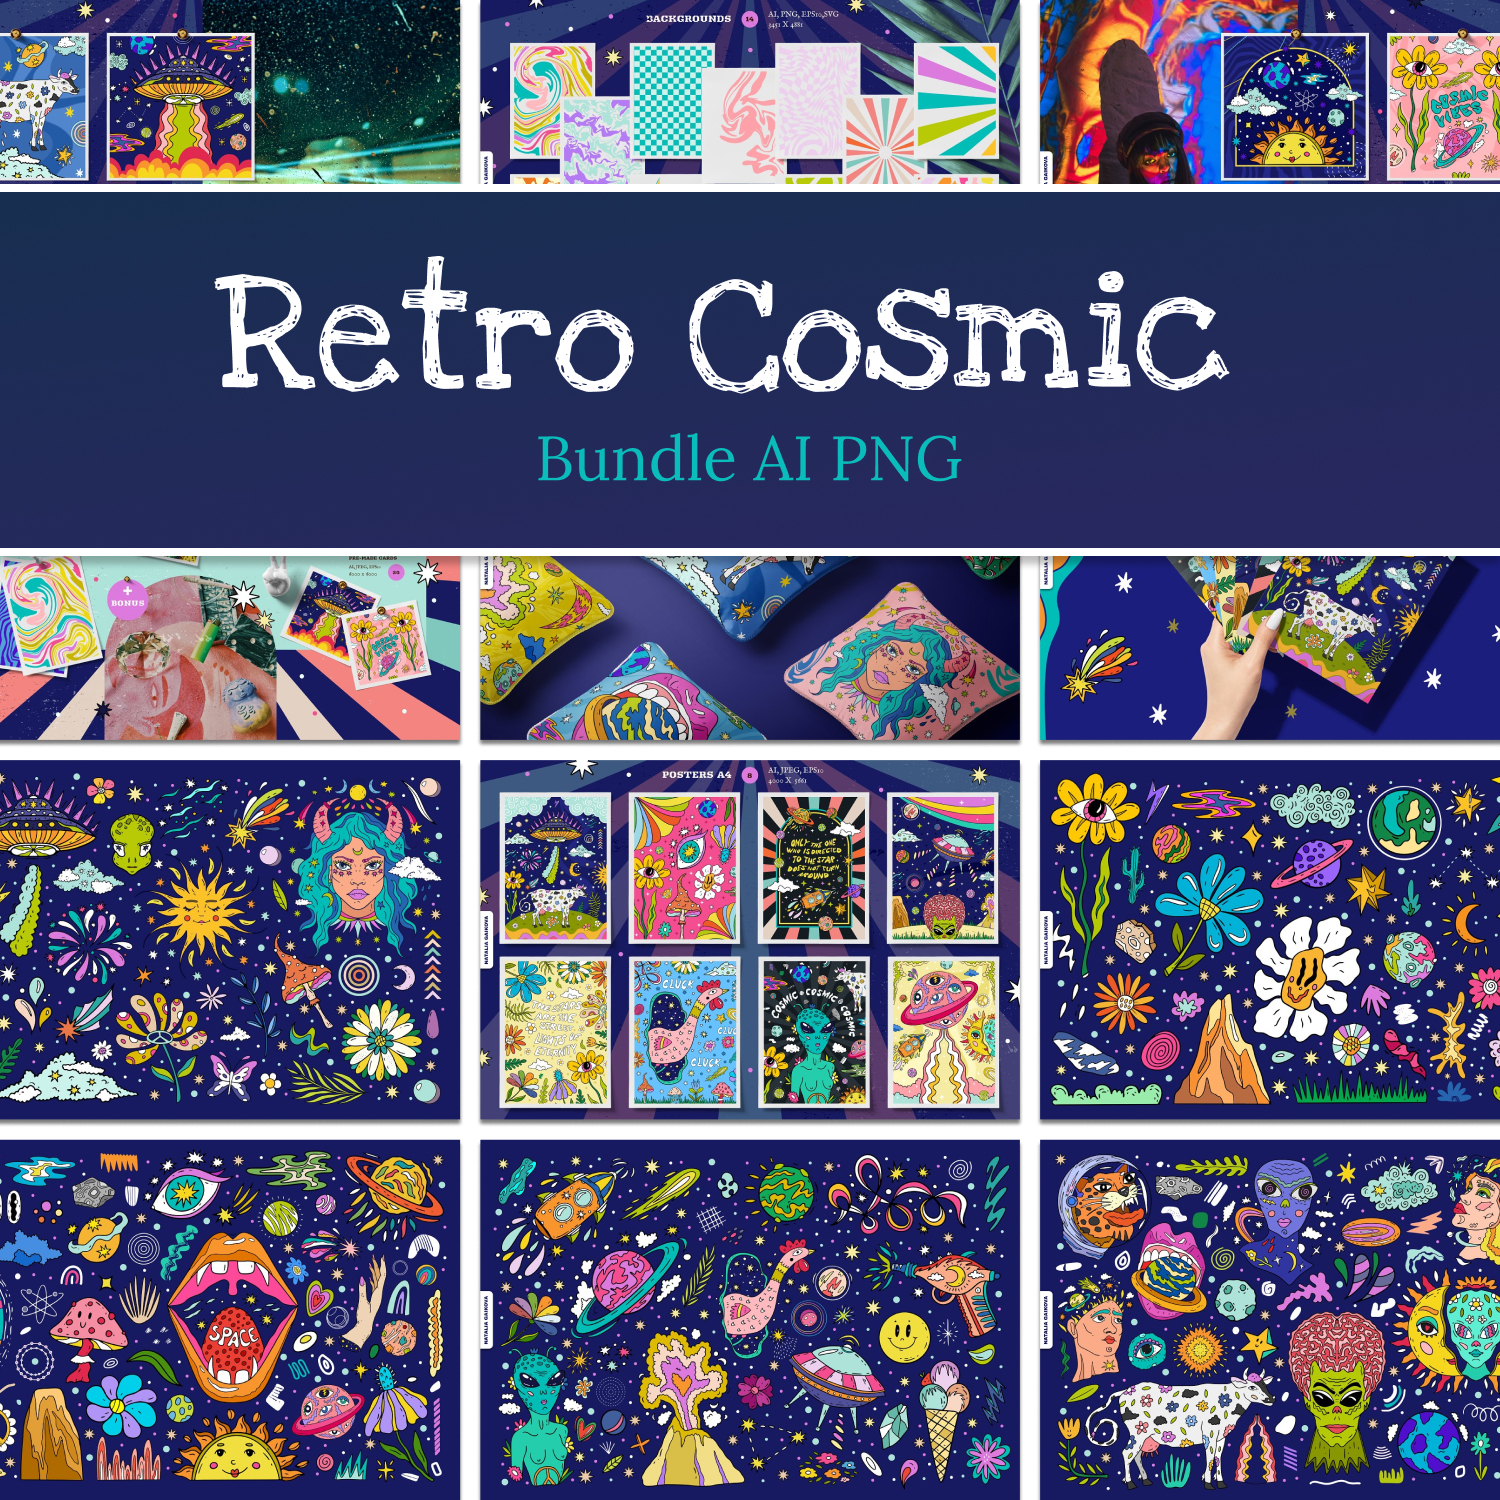 Prints of retro cosmic bundle ai png.